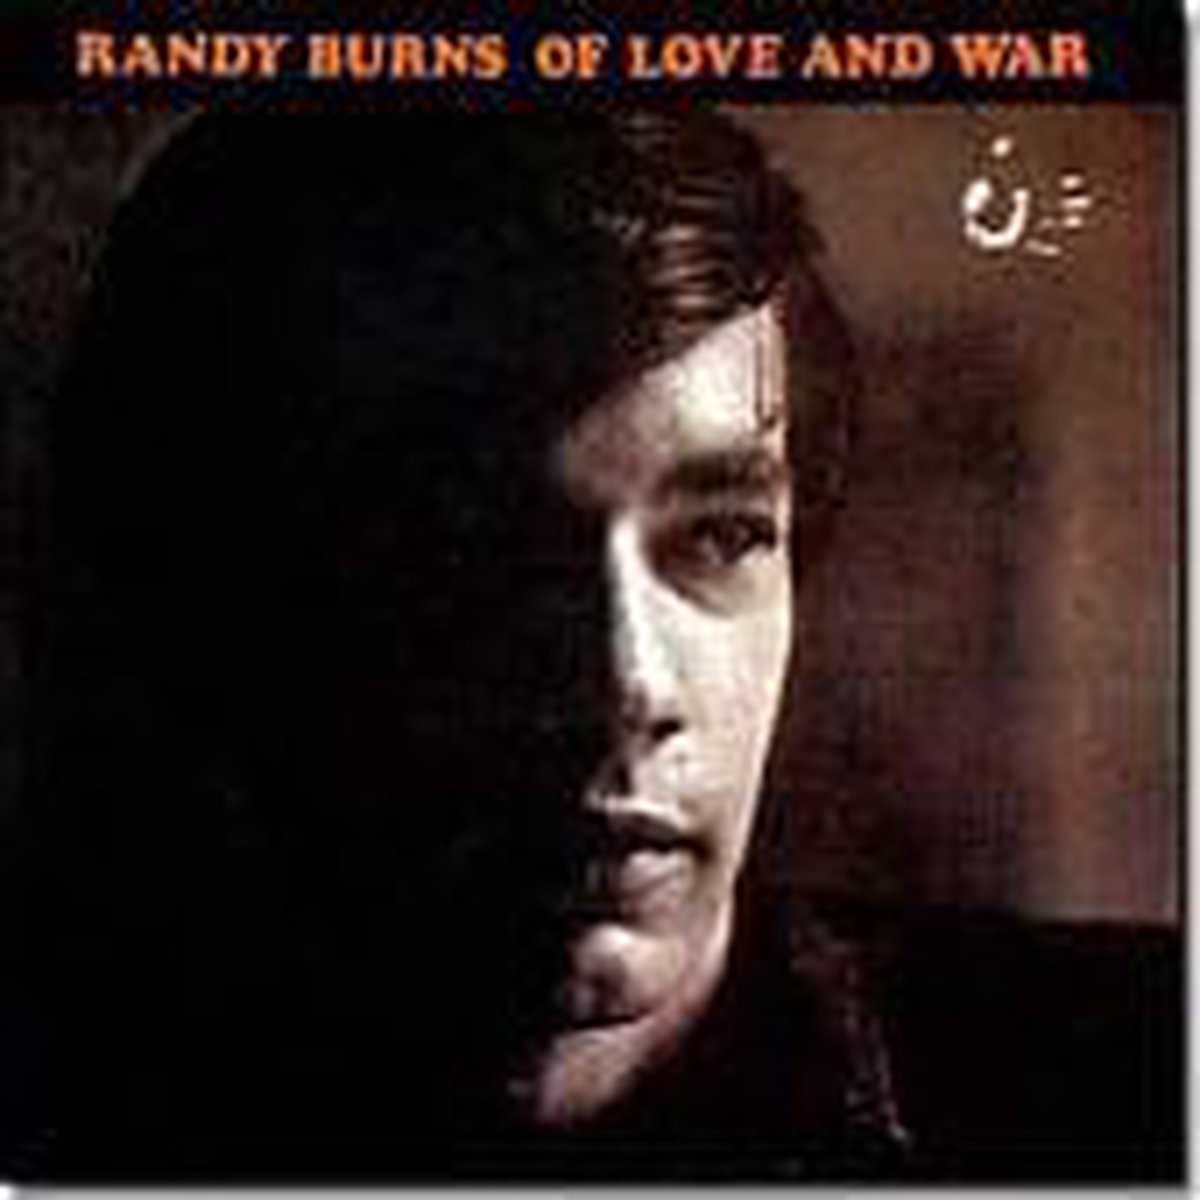 Of Love and War - Randy Burns